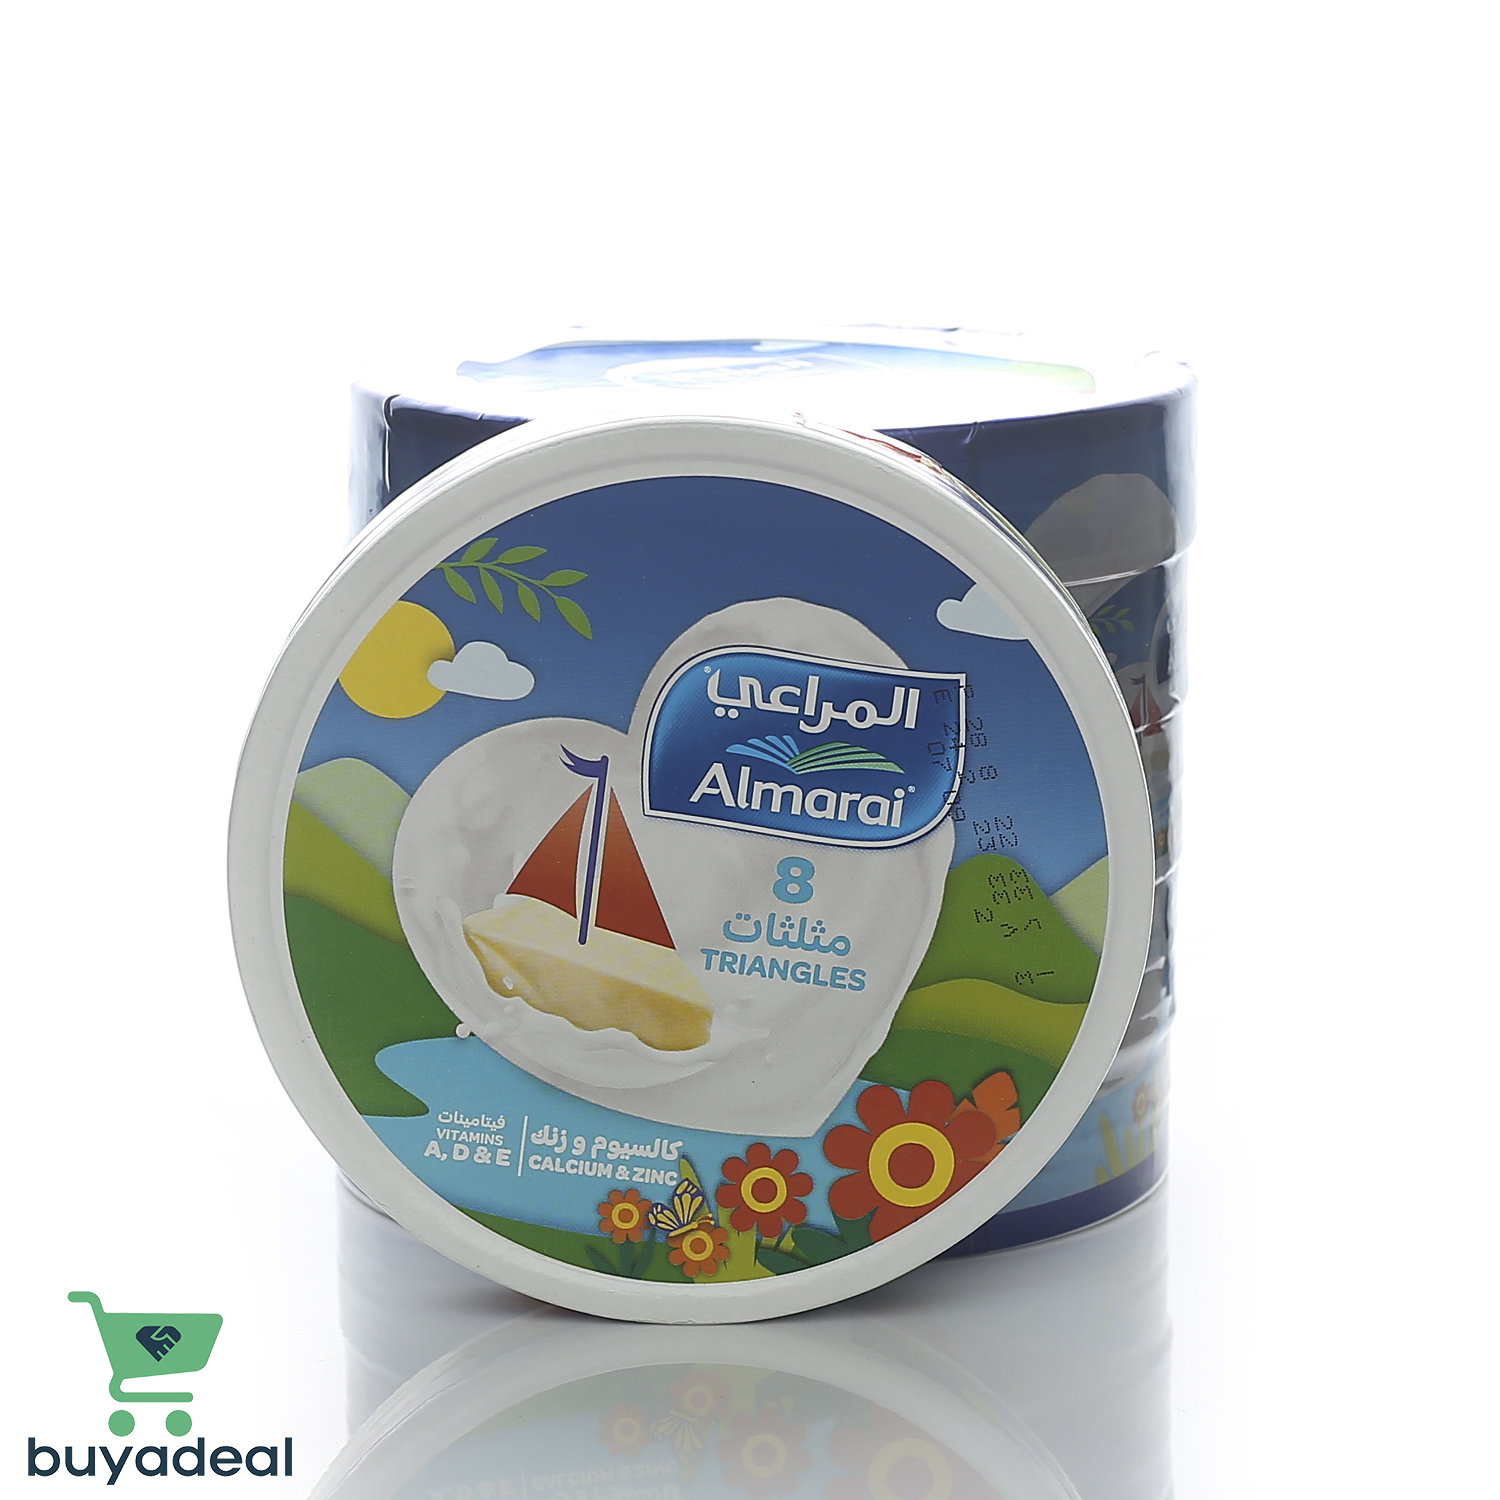 Buyadeal Product Almarai Cheese Triangles 8 Portions (120g)